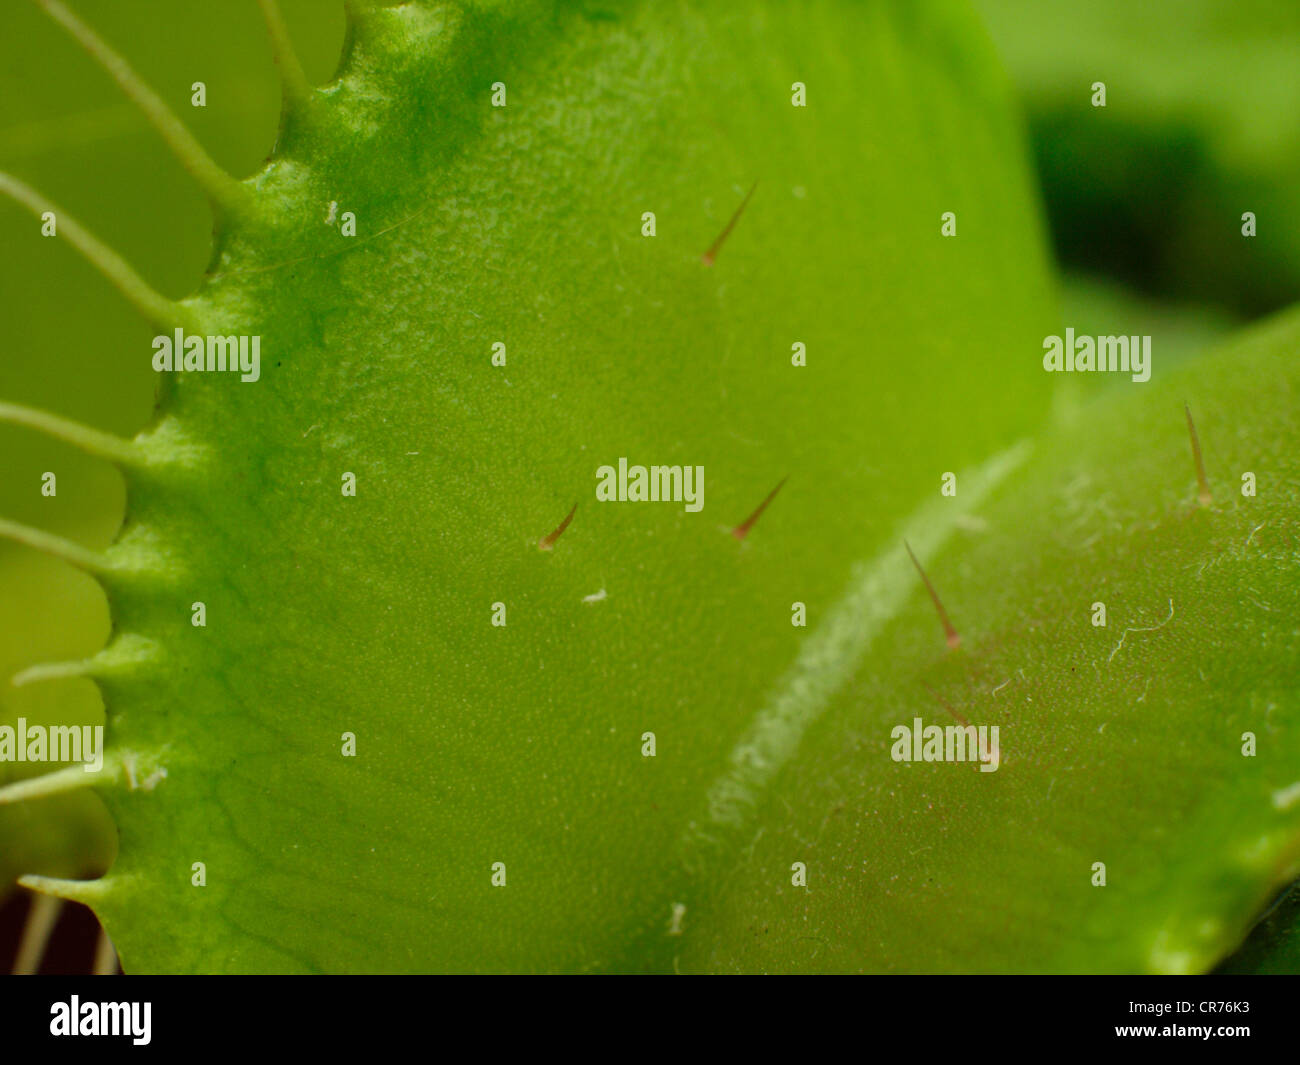 Venus fly trap, Dionaea muscipula, close up of the trigger hairs. Stock Photo